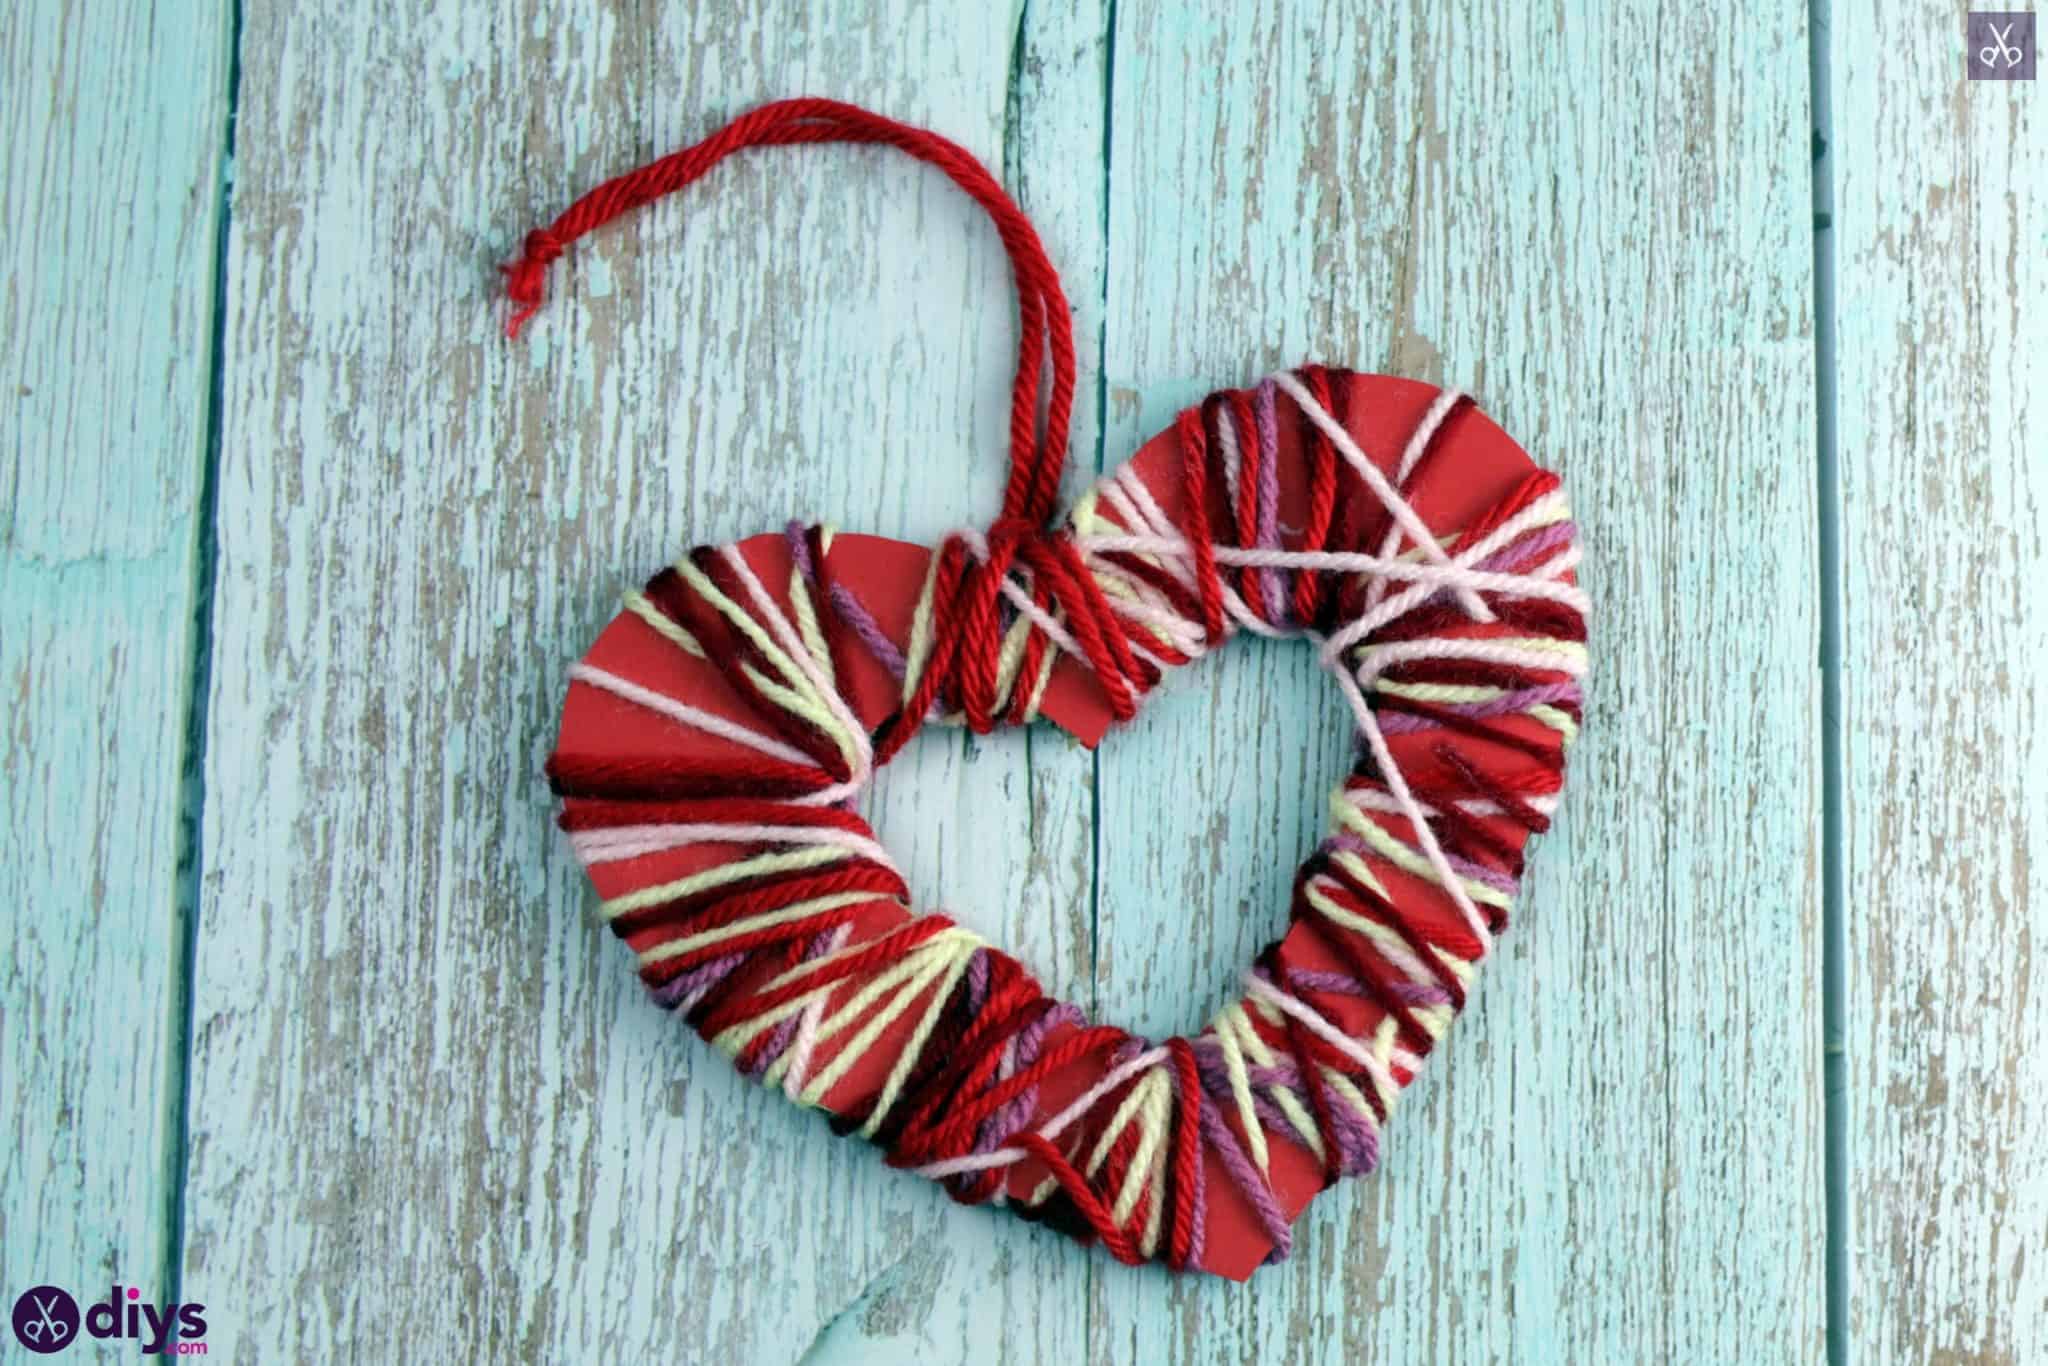 Diy yarn wrapped paper heart